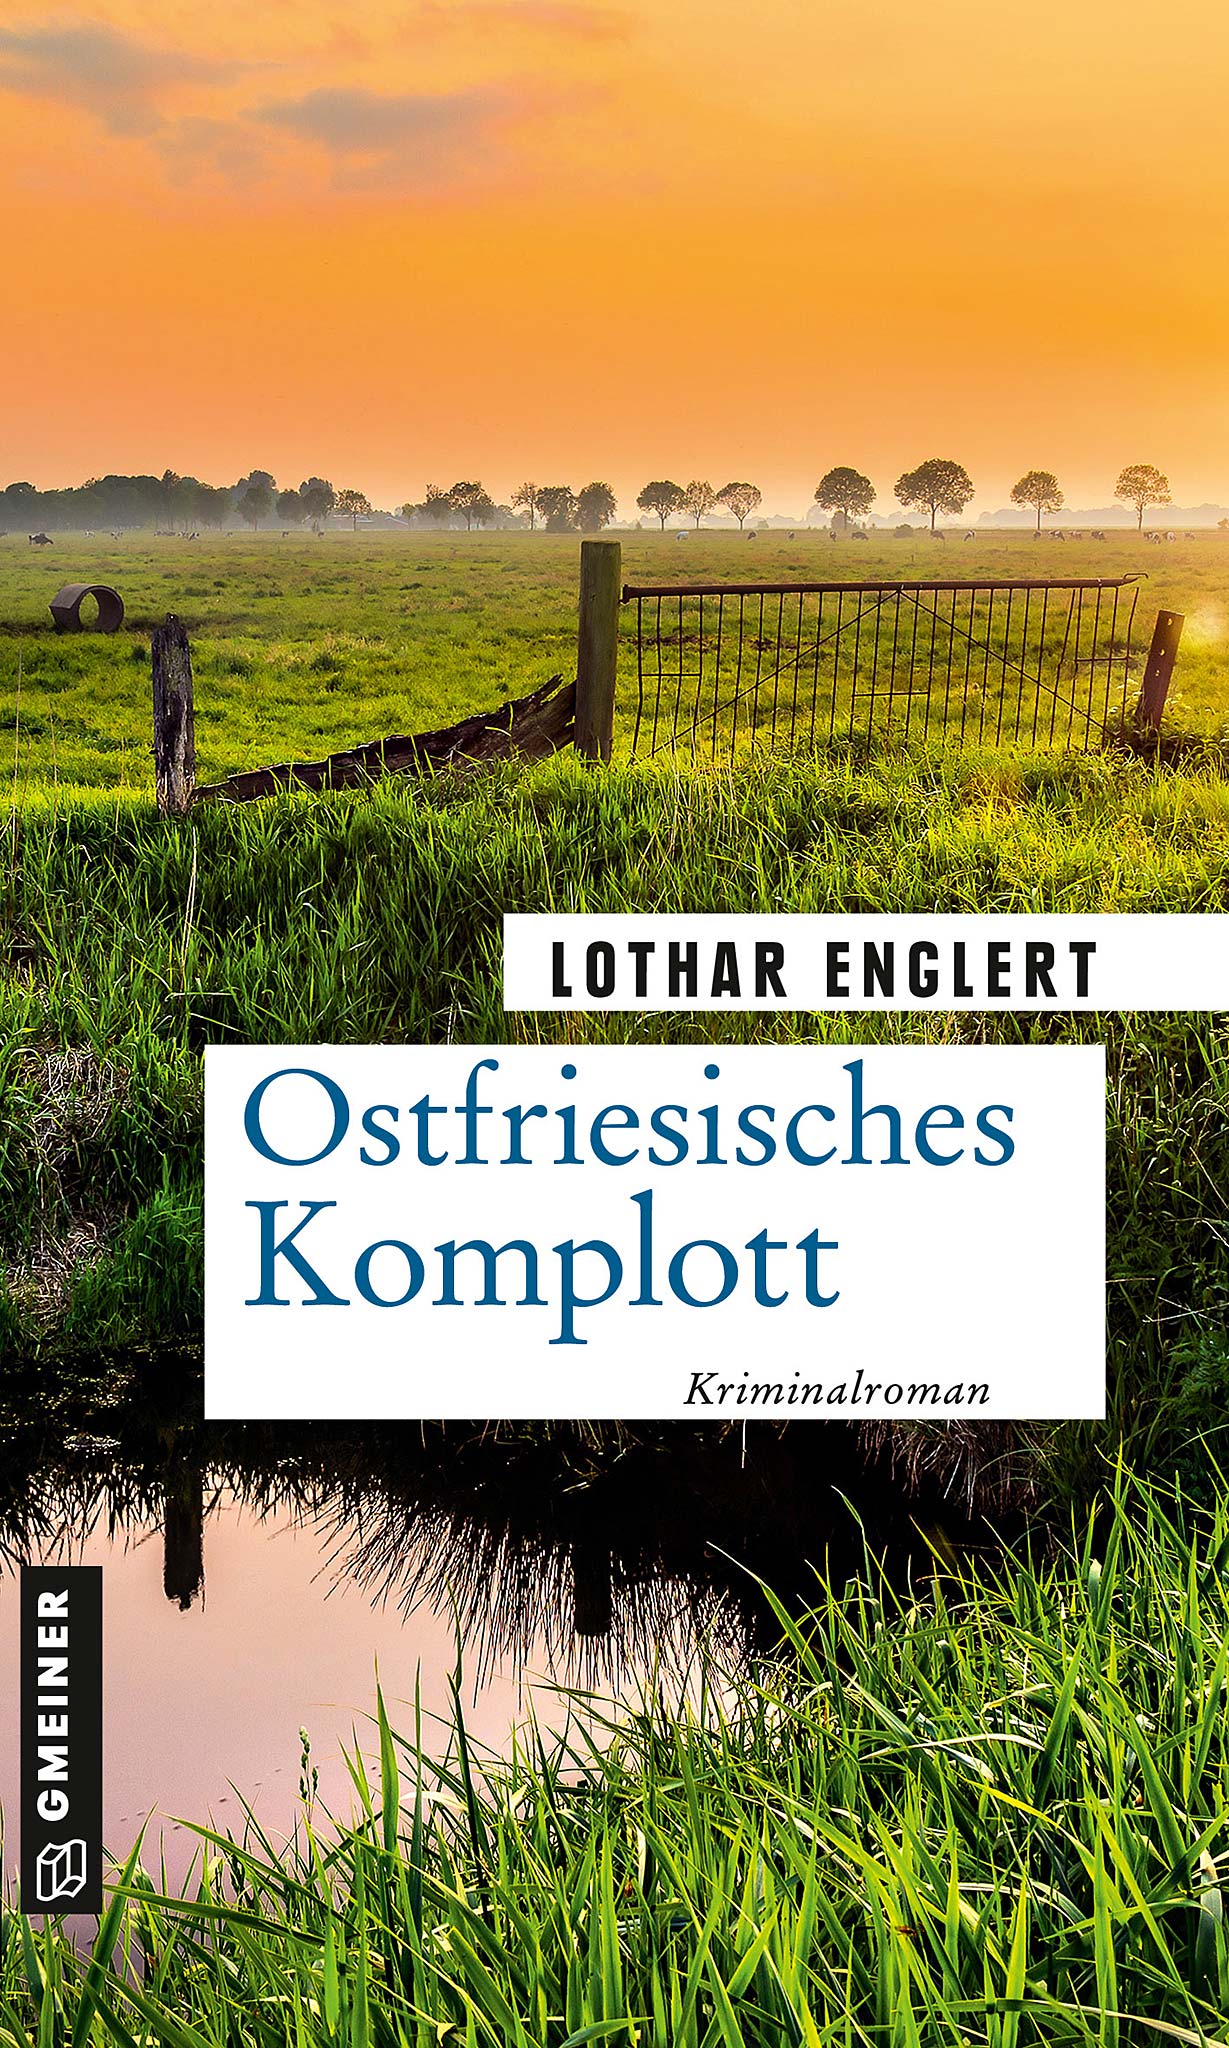 Lothar Englert liest im Sielhafenmuseum